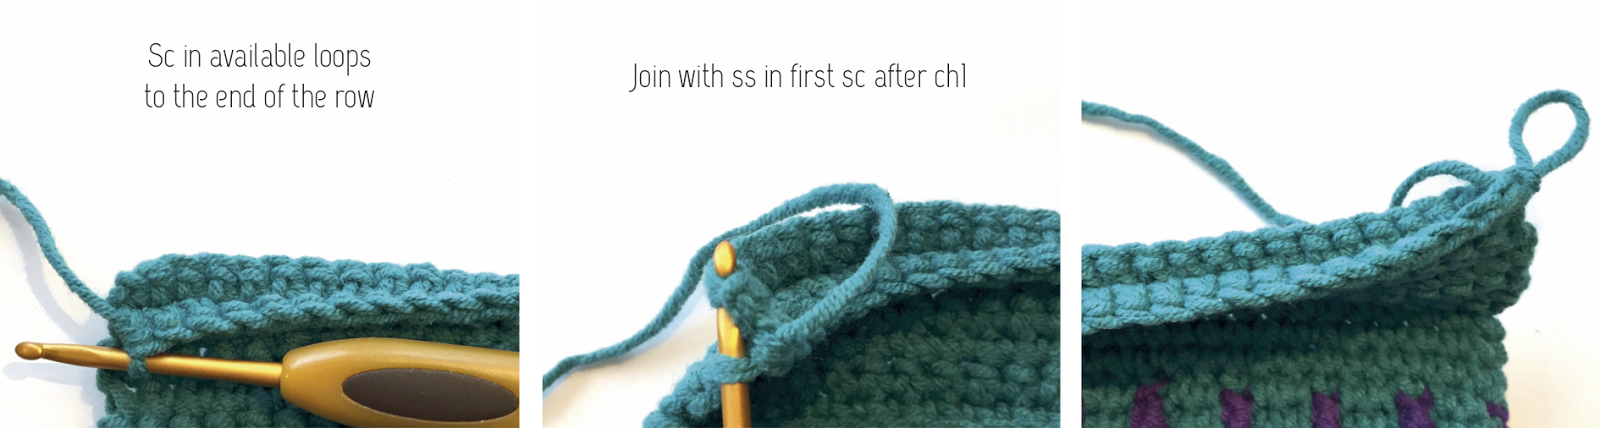 In-Between Crochet Hook Organizer: FREE pattern by Hilde Tindlund